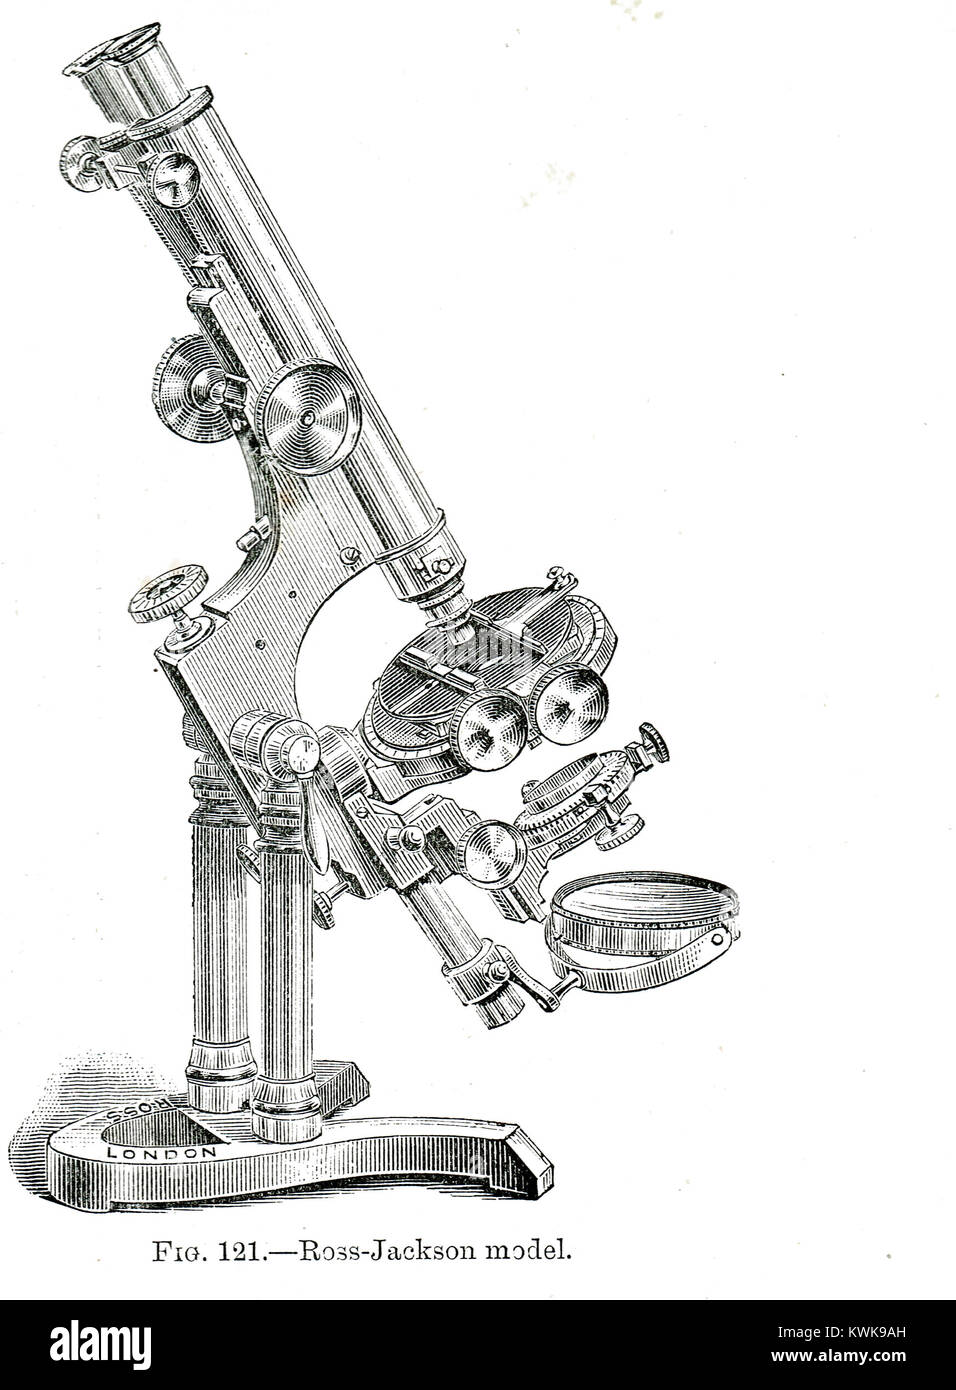 Ross-Jackson microscope, mid 19th century Stock Photo